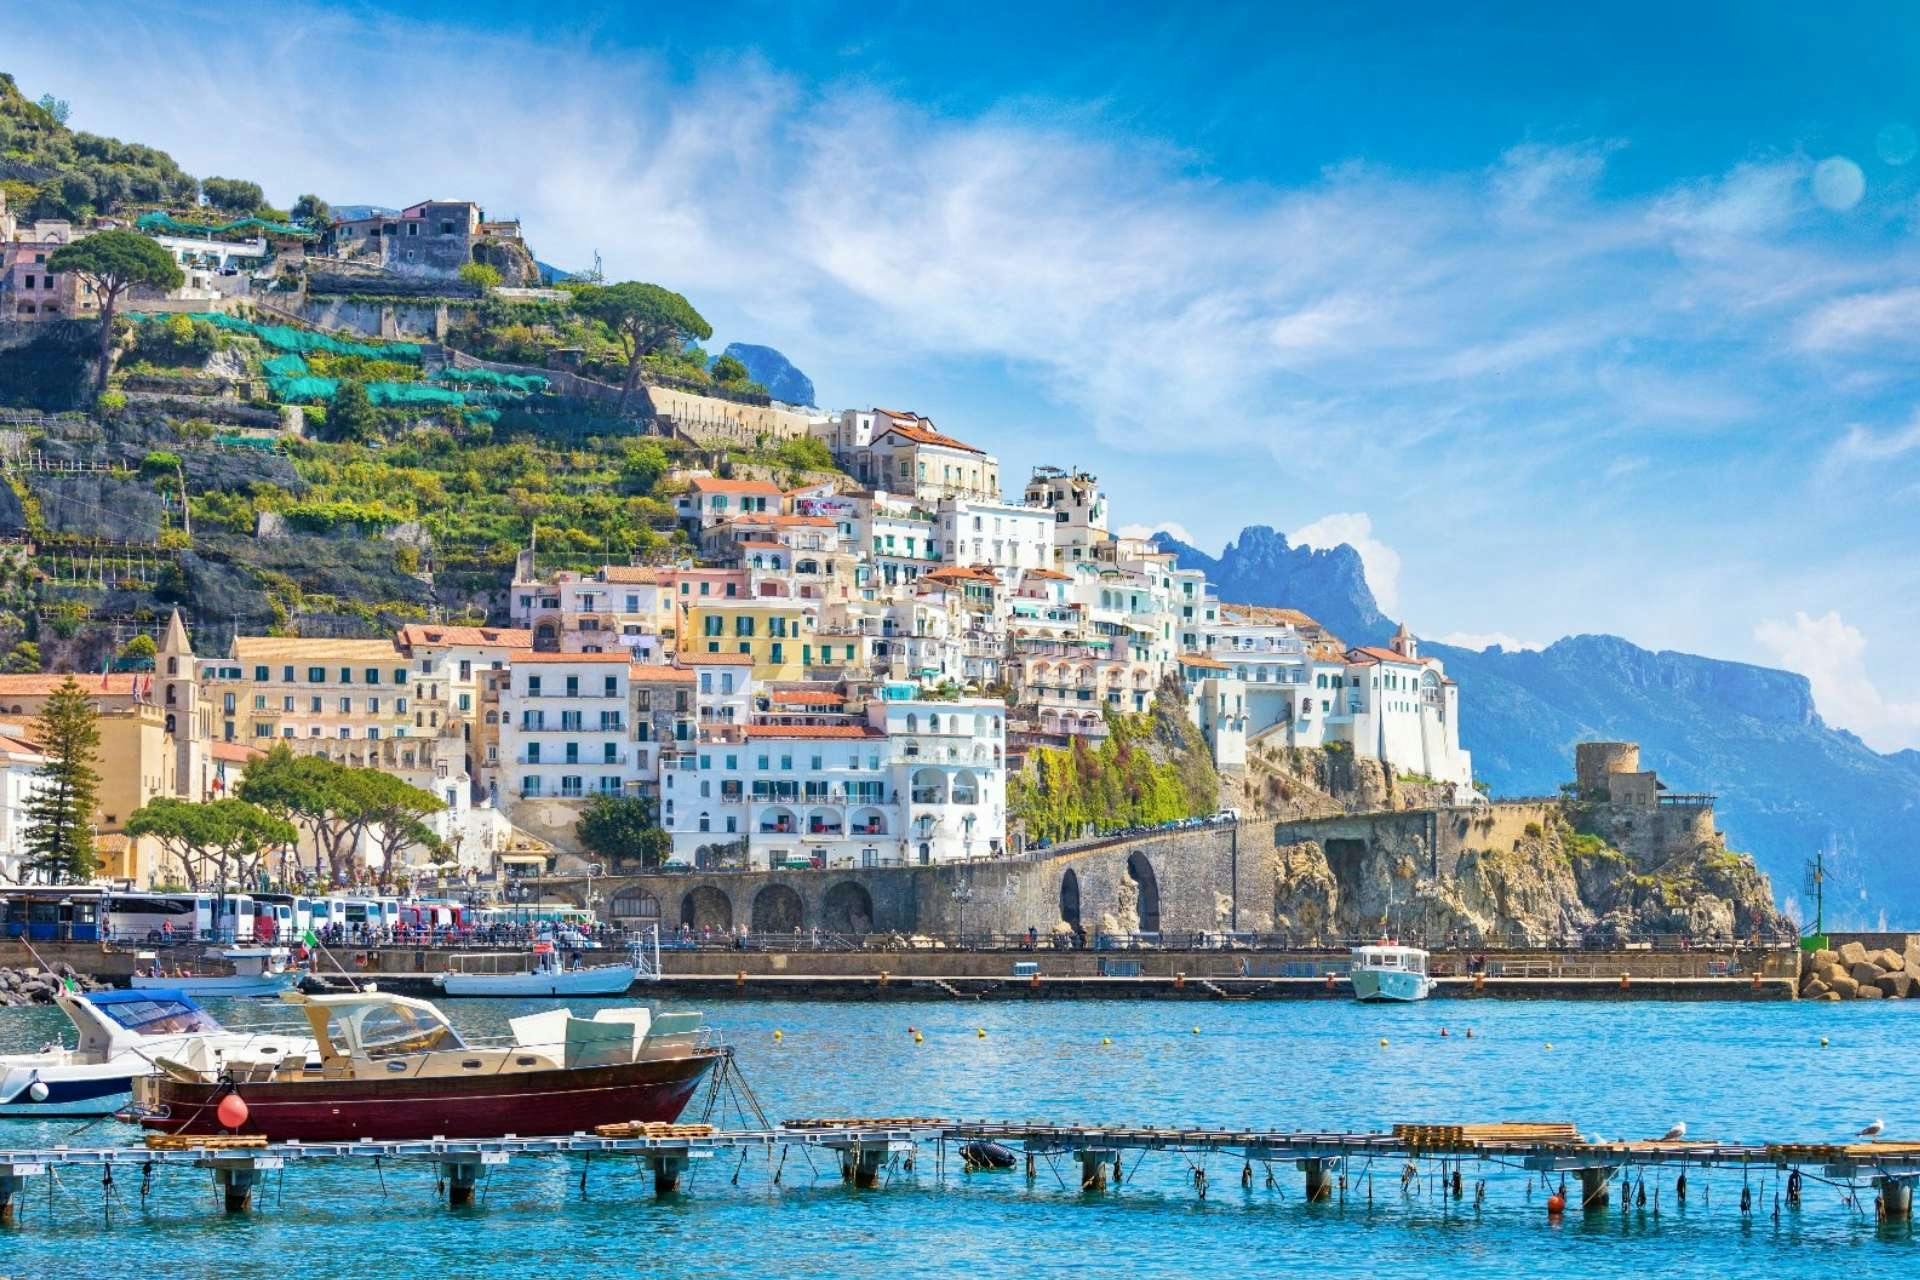 Cruise to the beauty of the Amalfi Coast